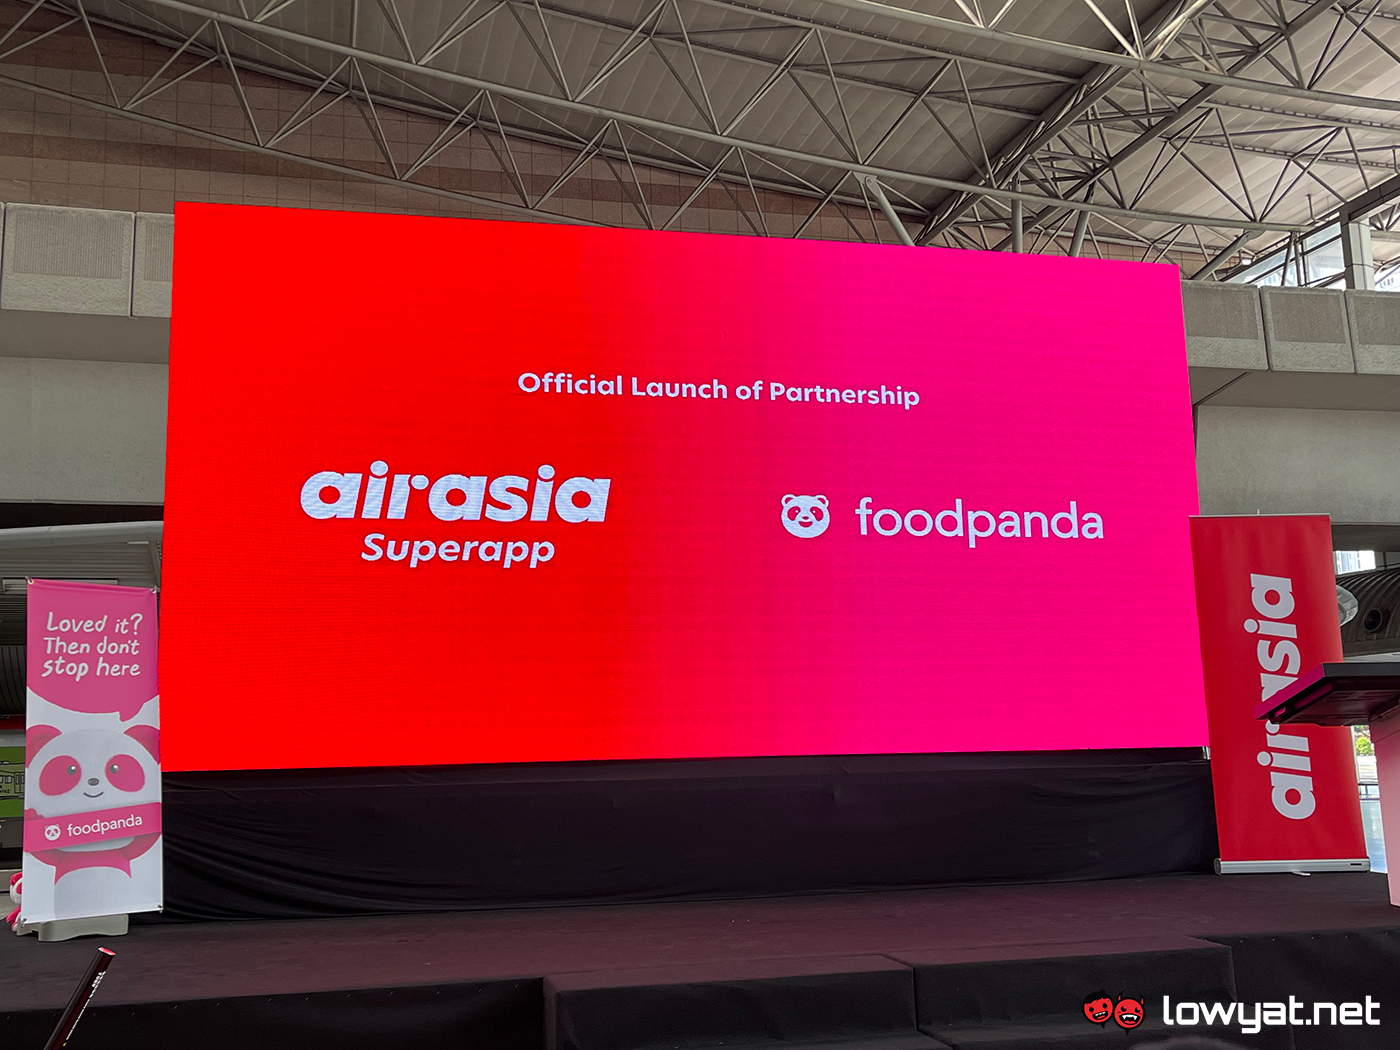 airasia foodpanda food delivery